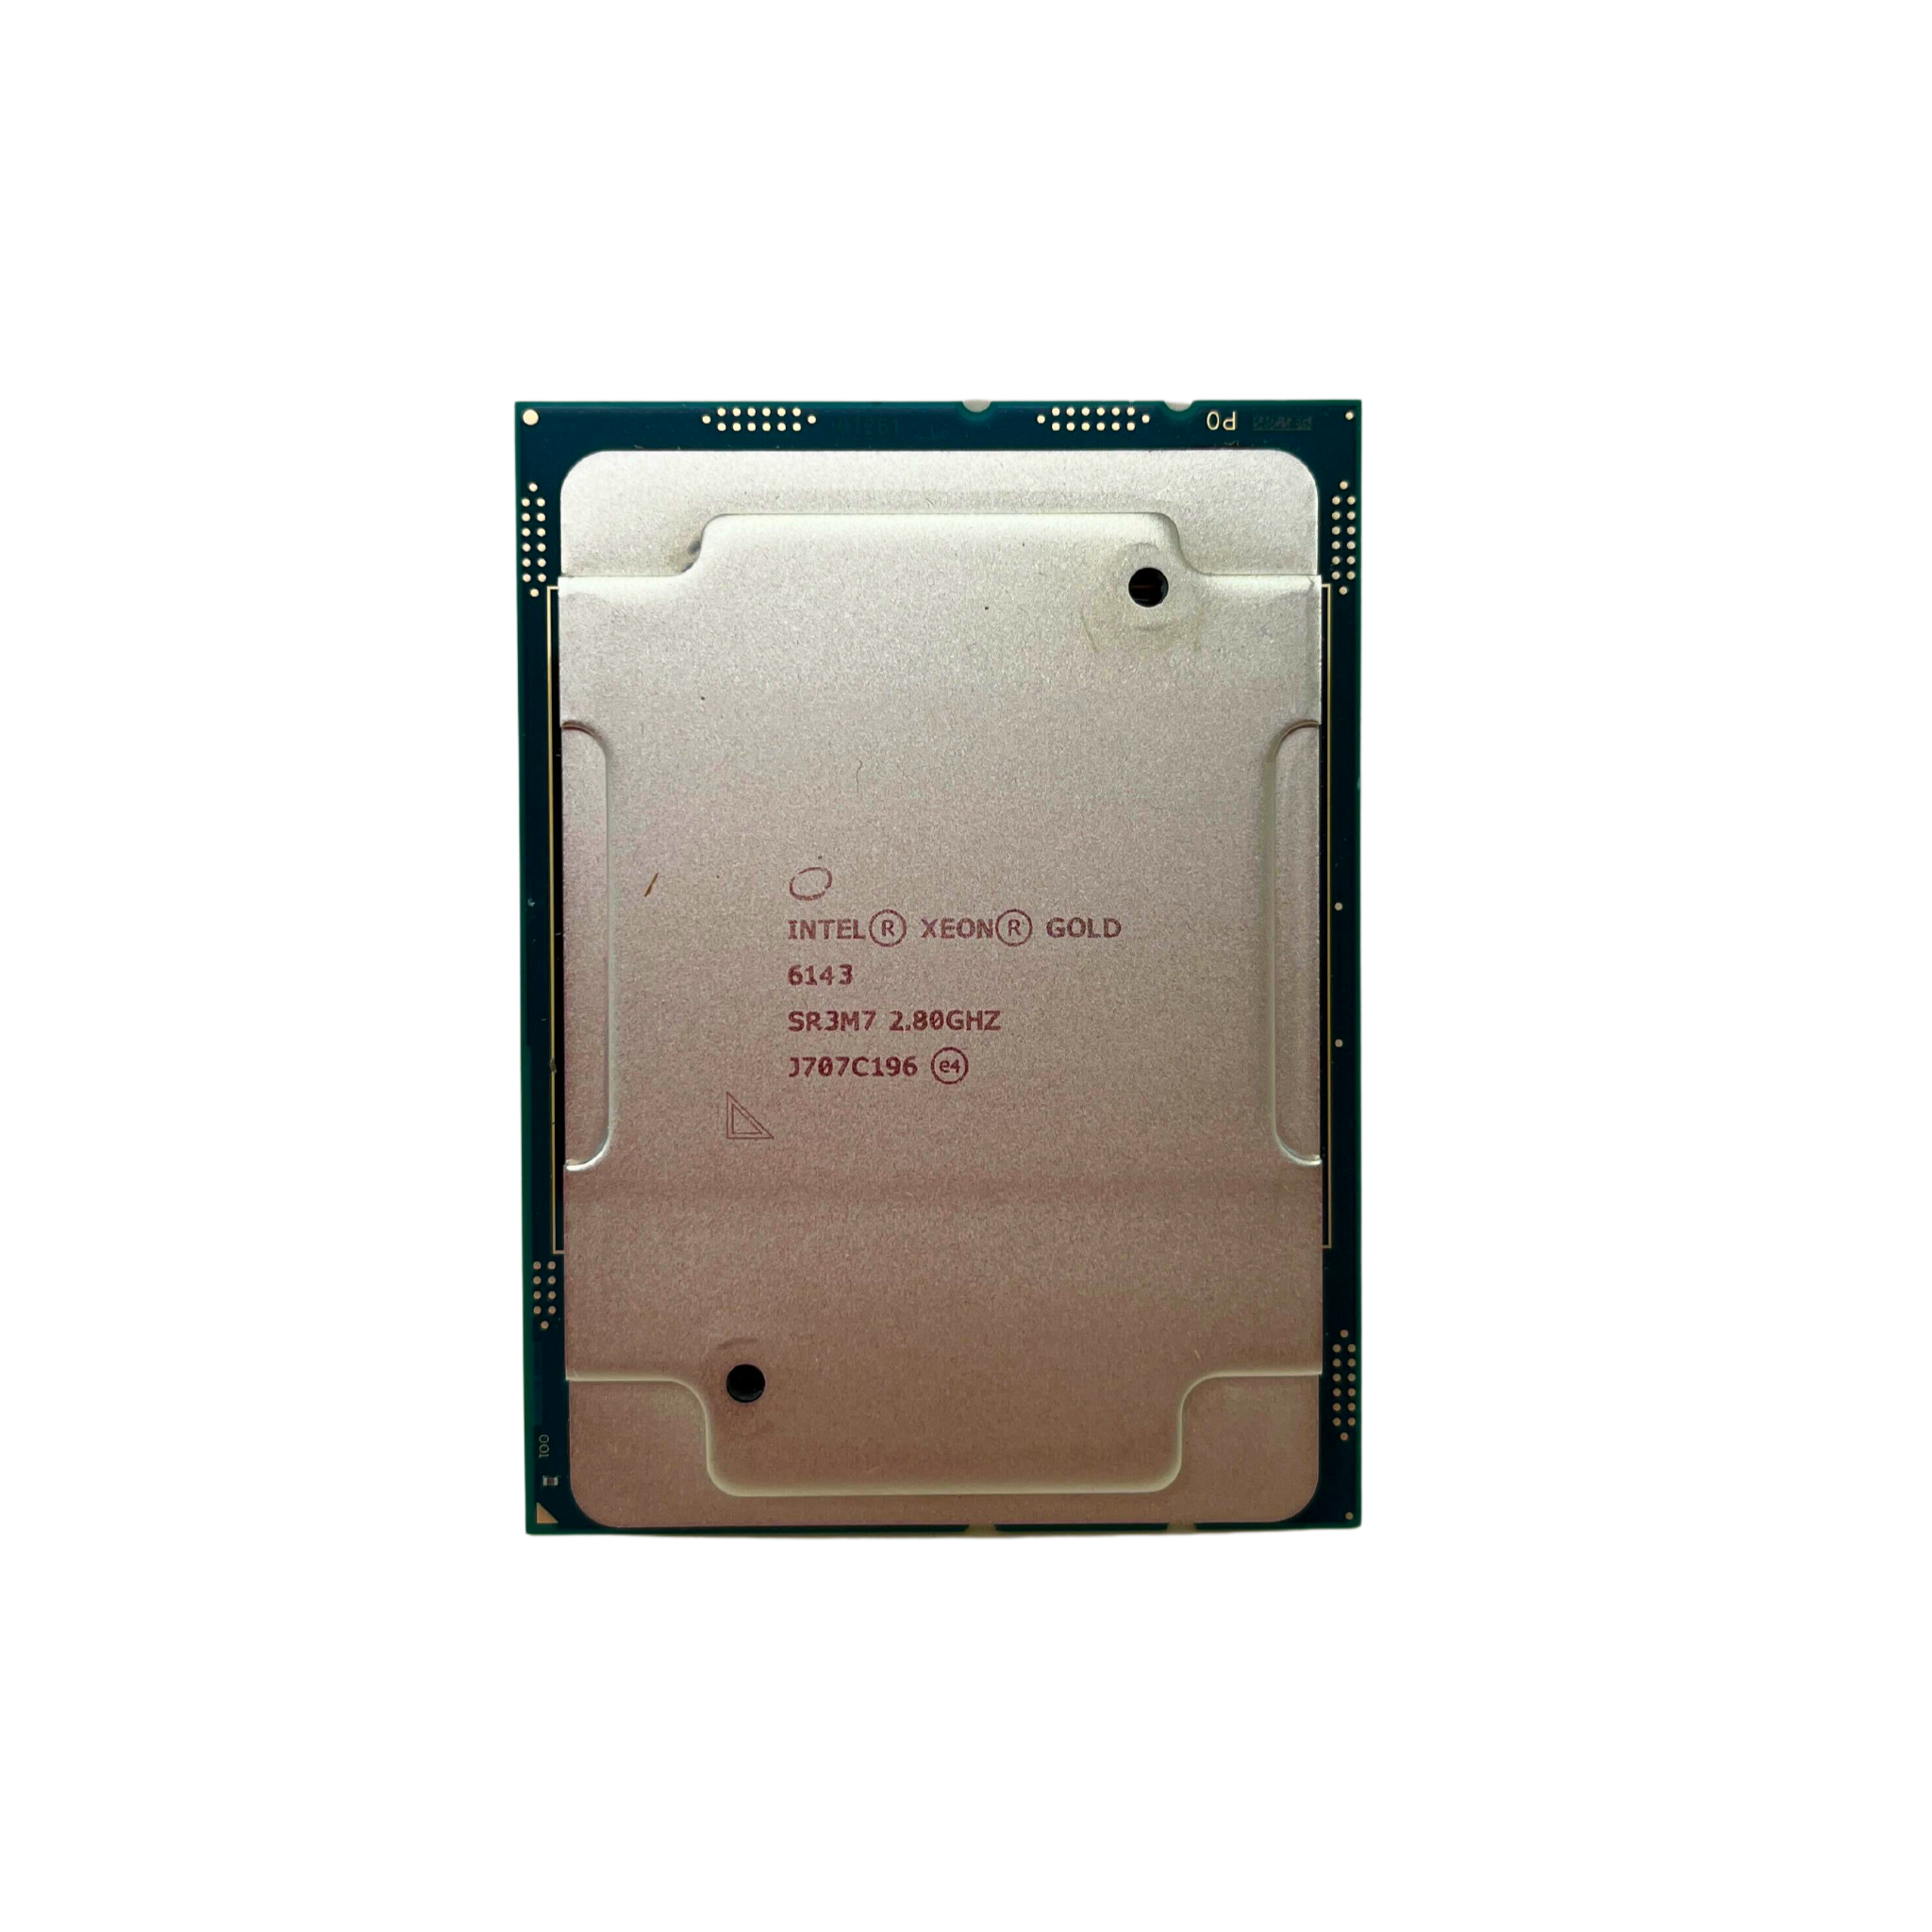 Intel Xeon Gold 6143 2.8ghz 22mb 16 Core CPU Processor (Intel Xeon Gold 6143)